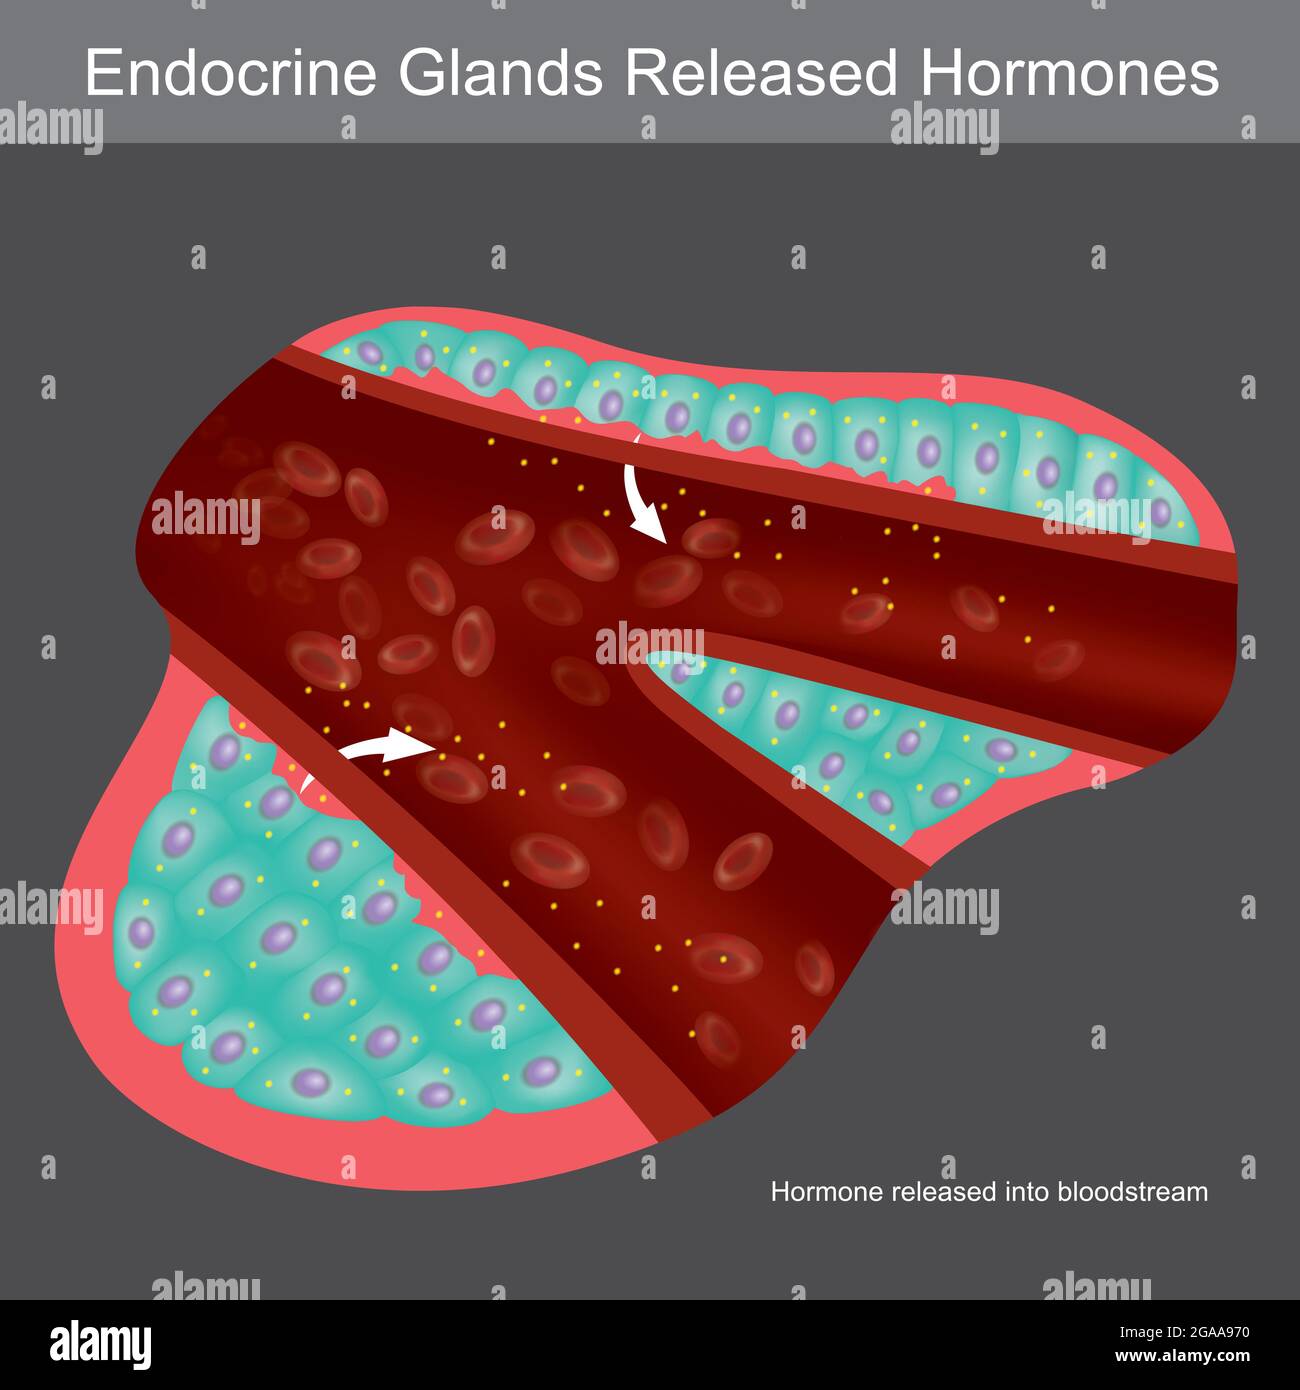 Exocrine Glands Secrete Hormones. Illustration showing cross section for learning exocrine glands human. Stock Vector